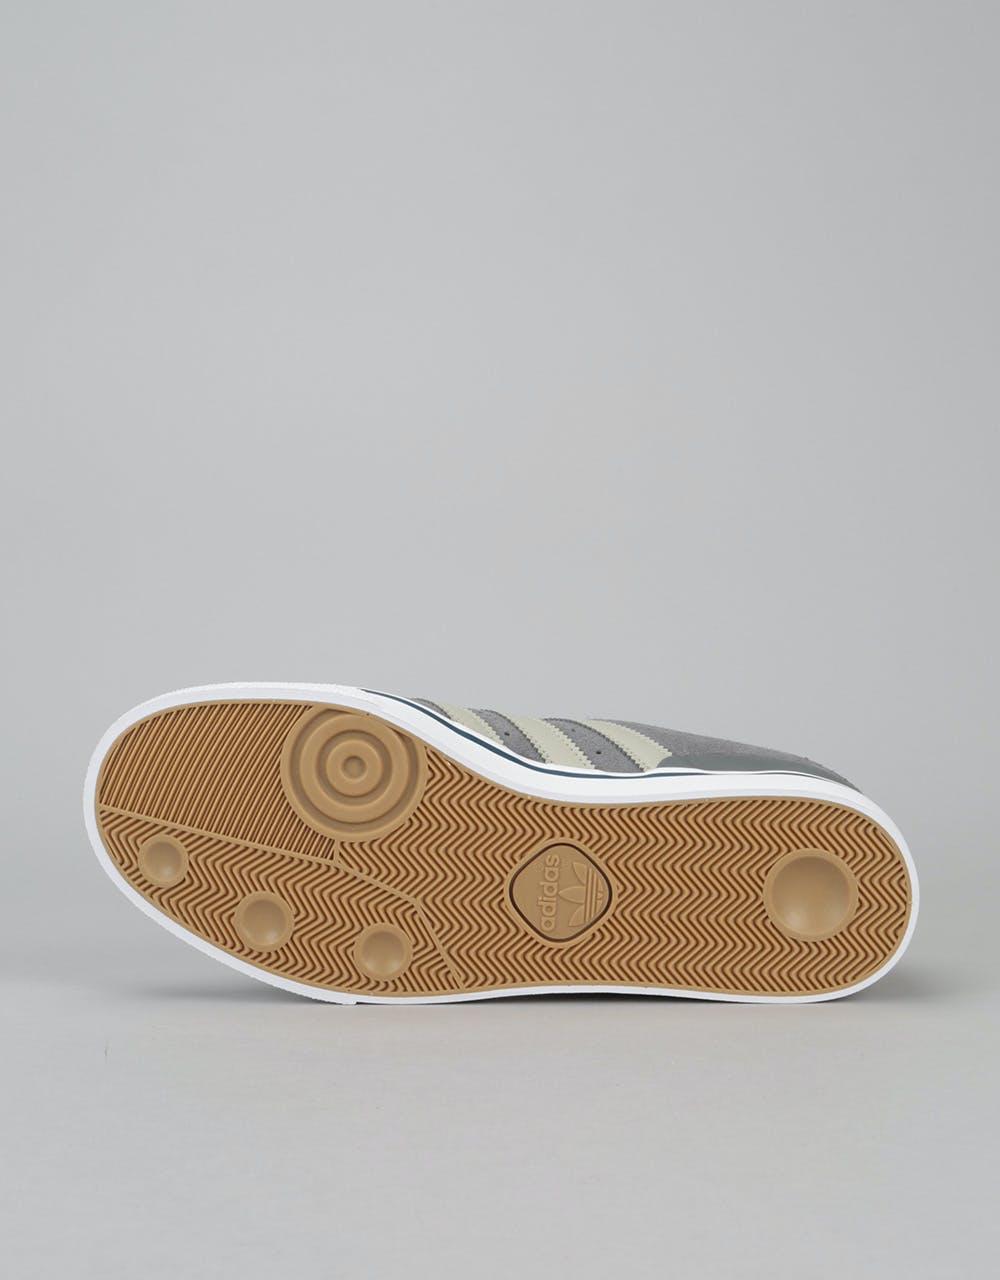 Adidas Busenitz Vulc Skate Shoes - Granite/Sesame/Ftwr White